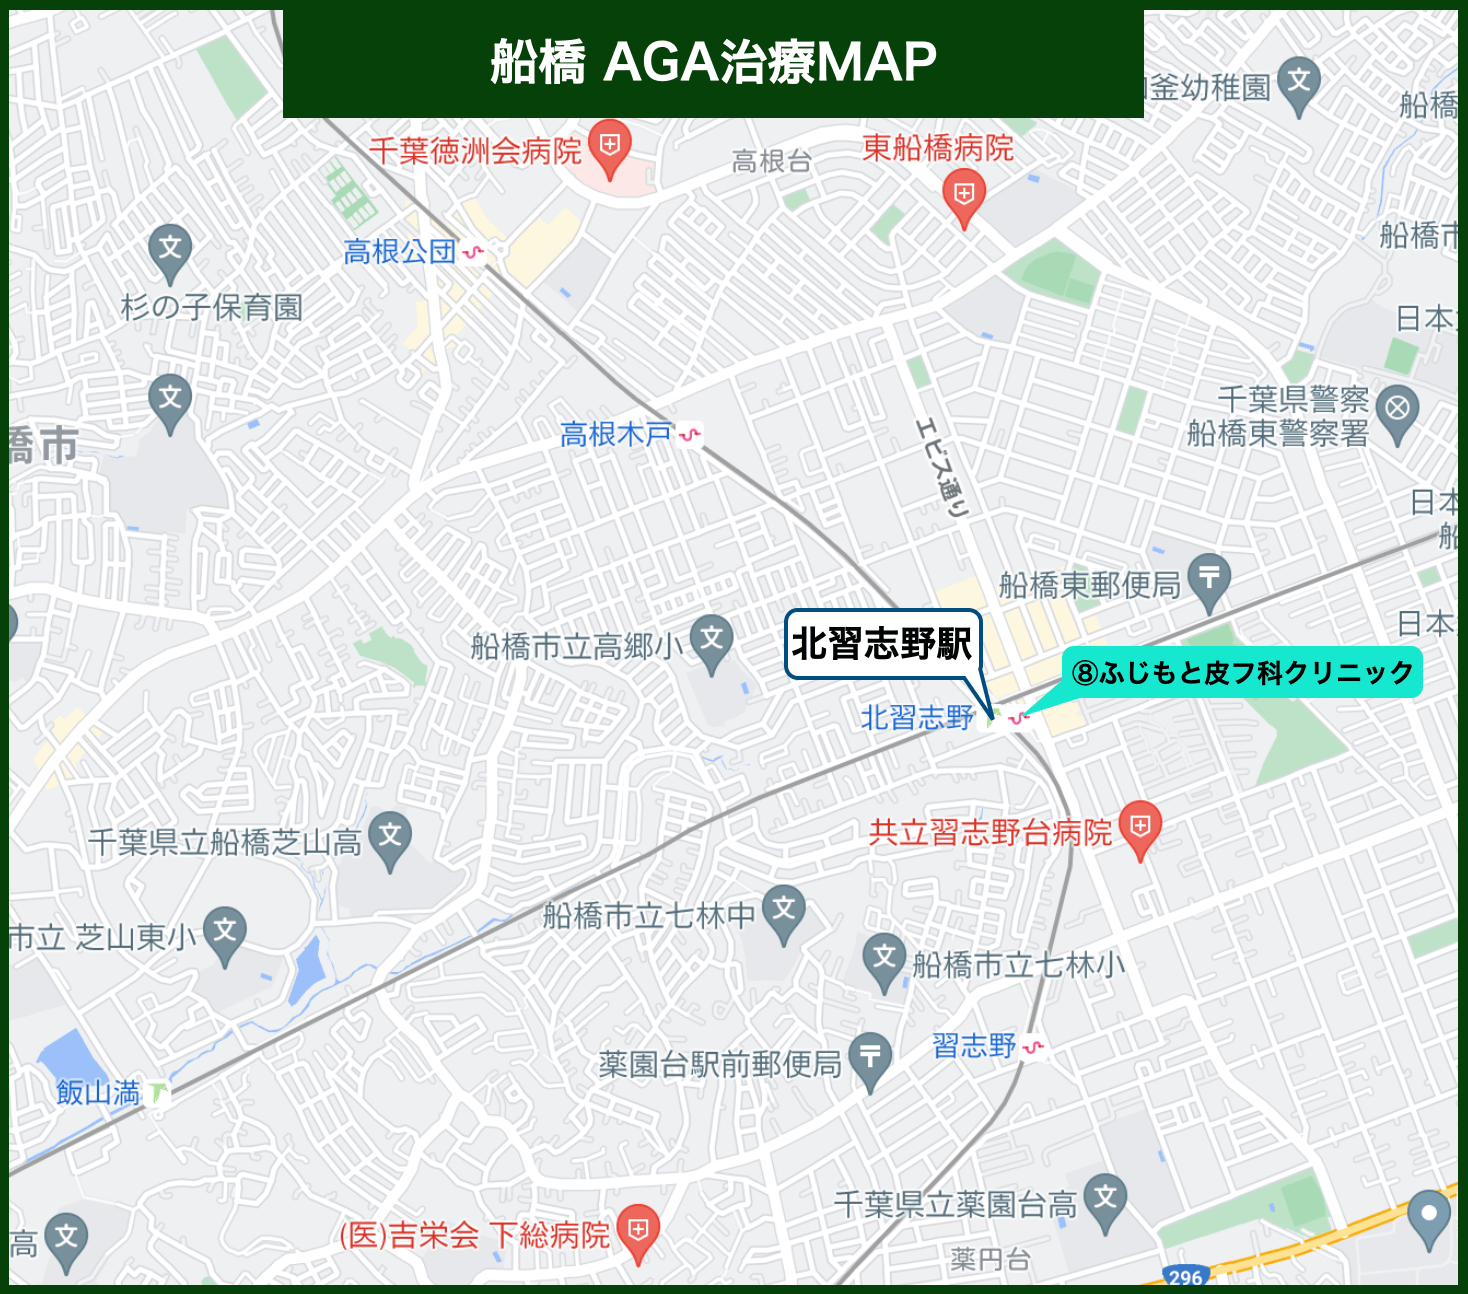 船橋 AGA治療MAP